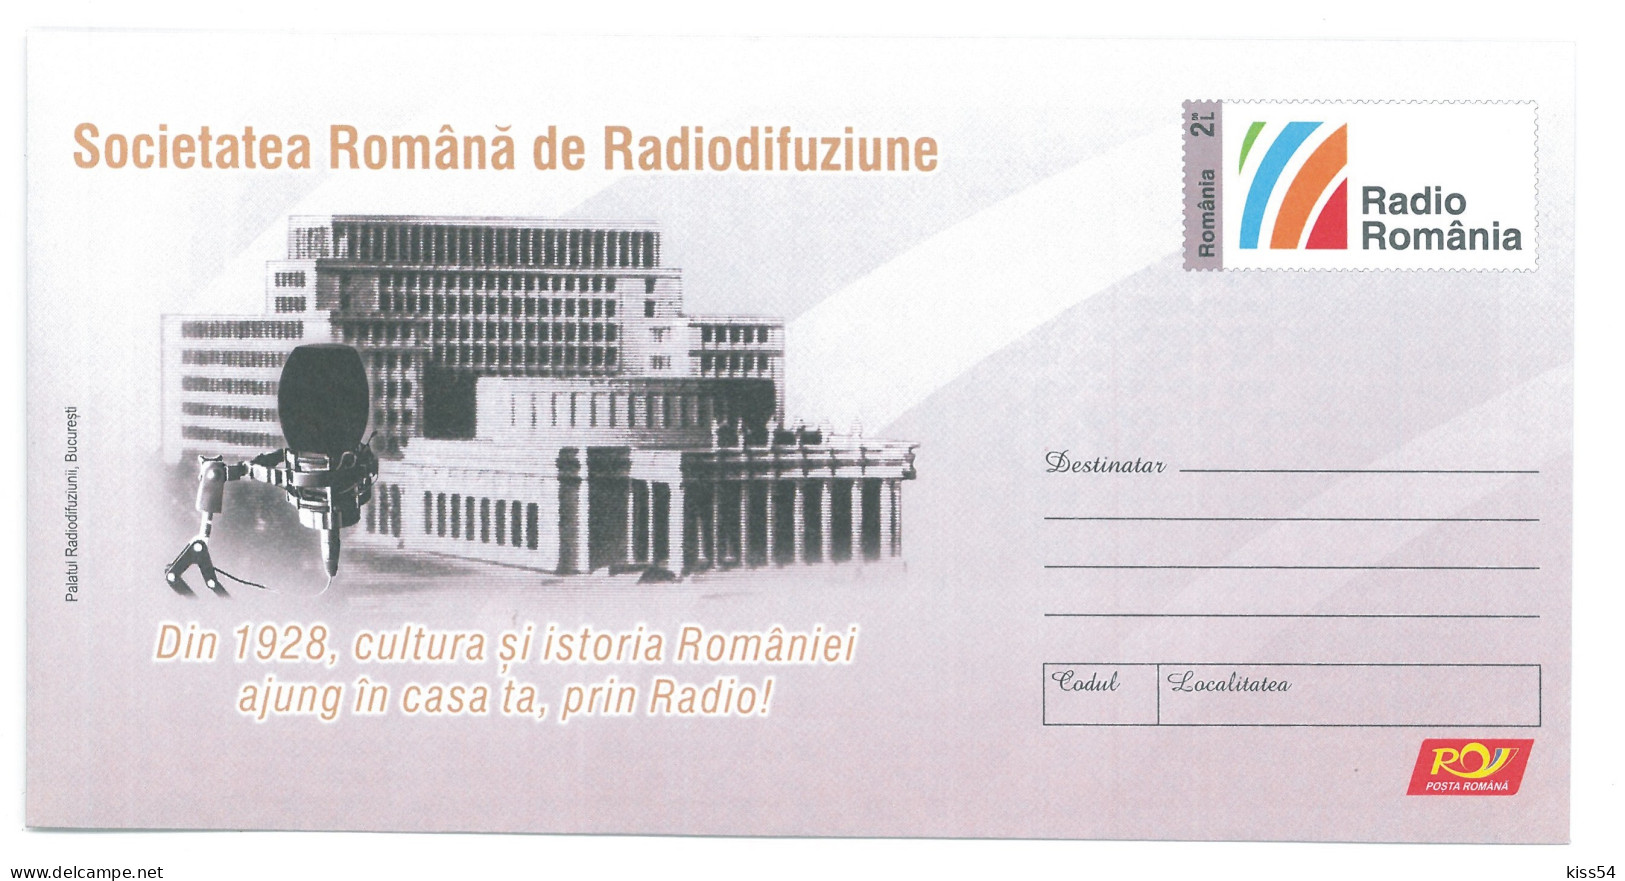 IP 2021 - 45 RADIO, MICROPHONE, Romanian Broadcasting Company, Romania - Stationery - Unused - 2021 - Postal Stationery